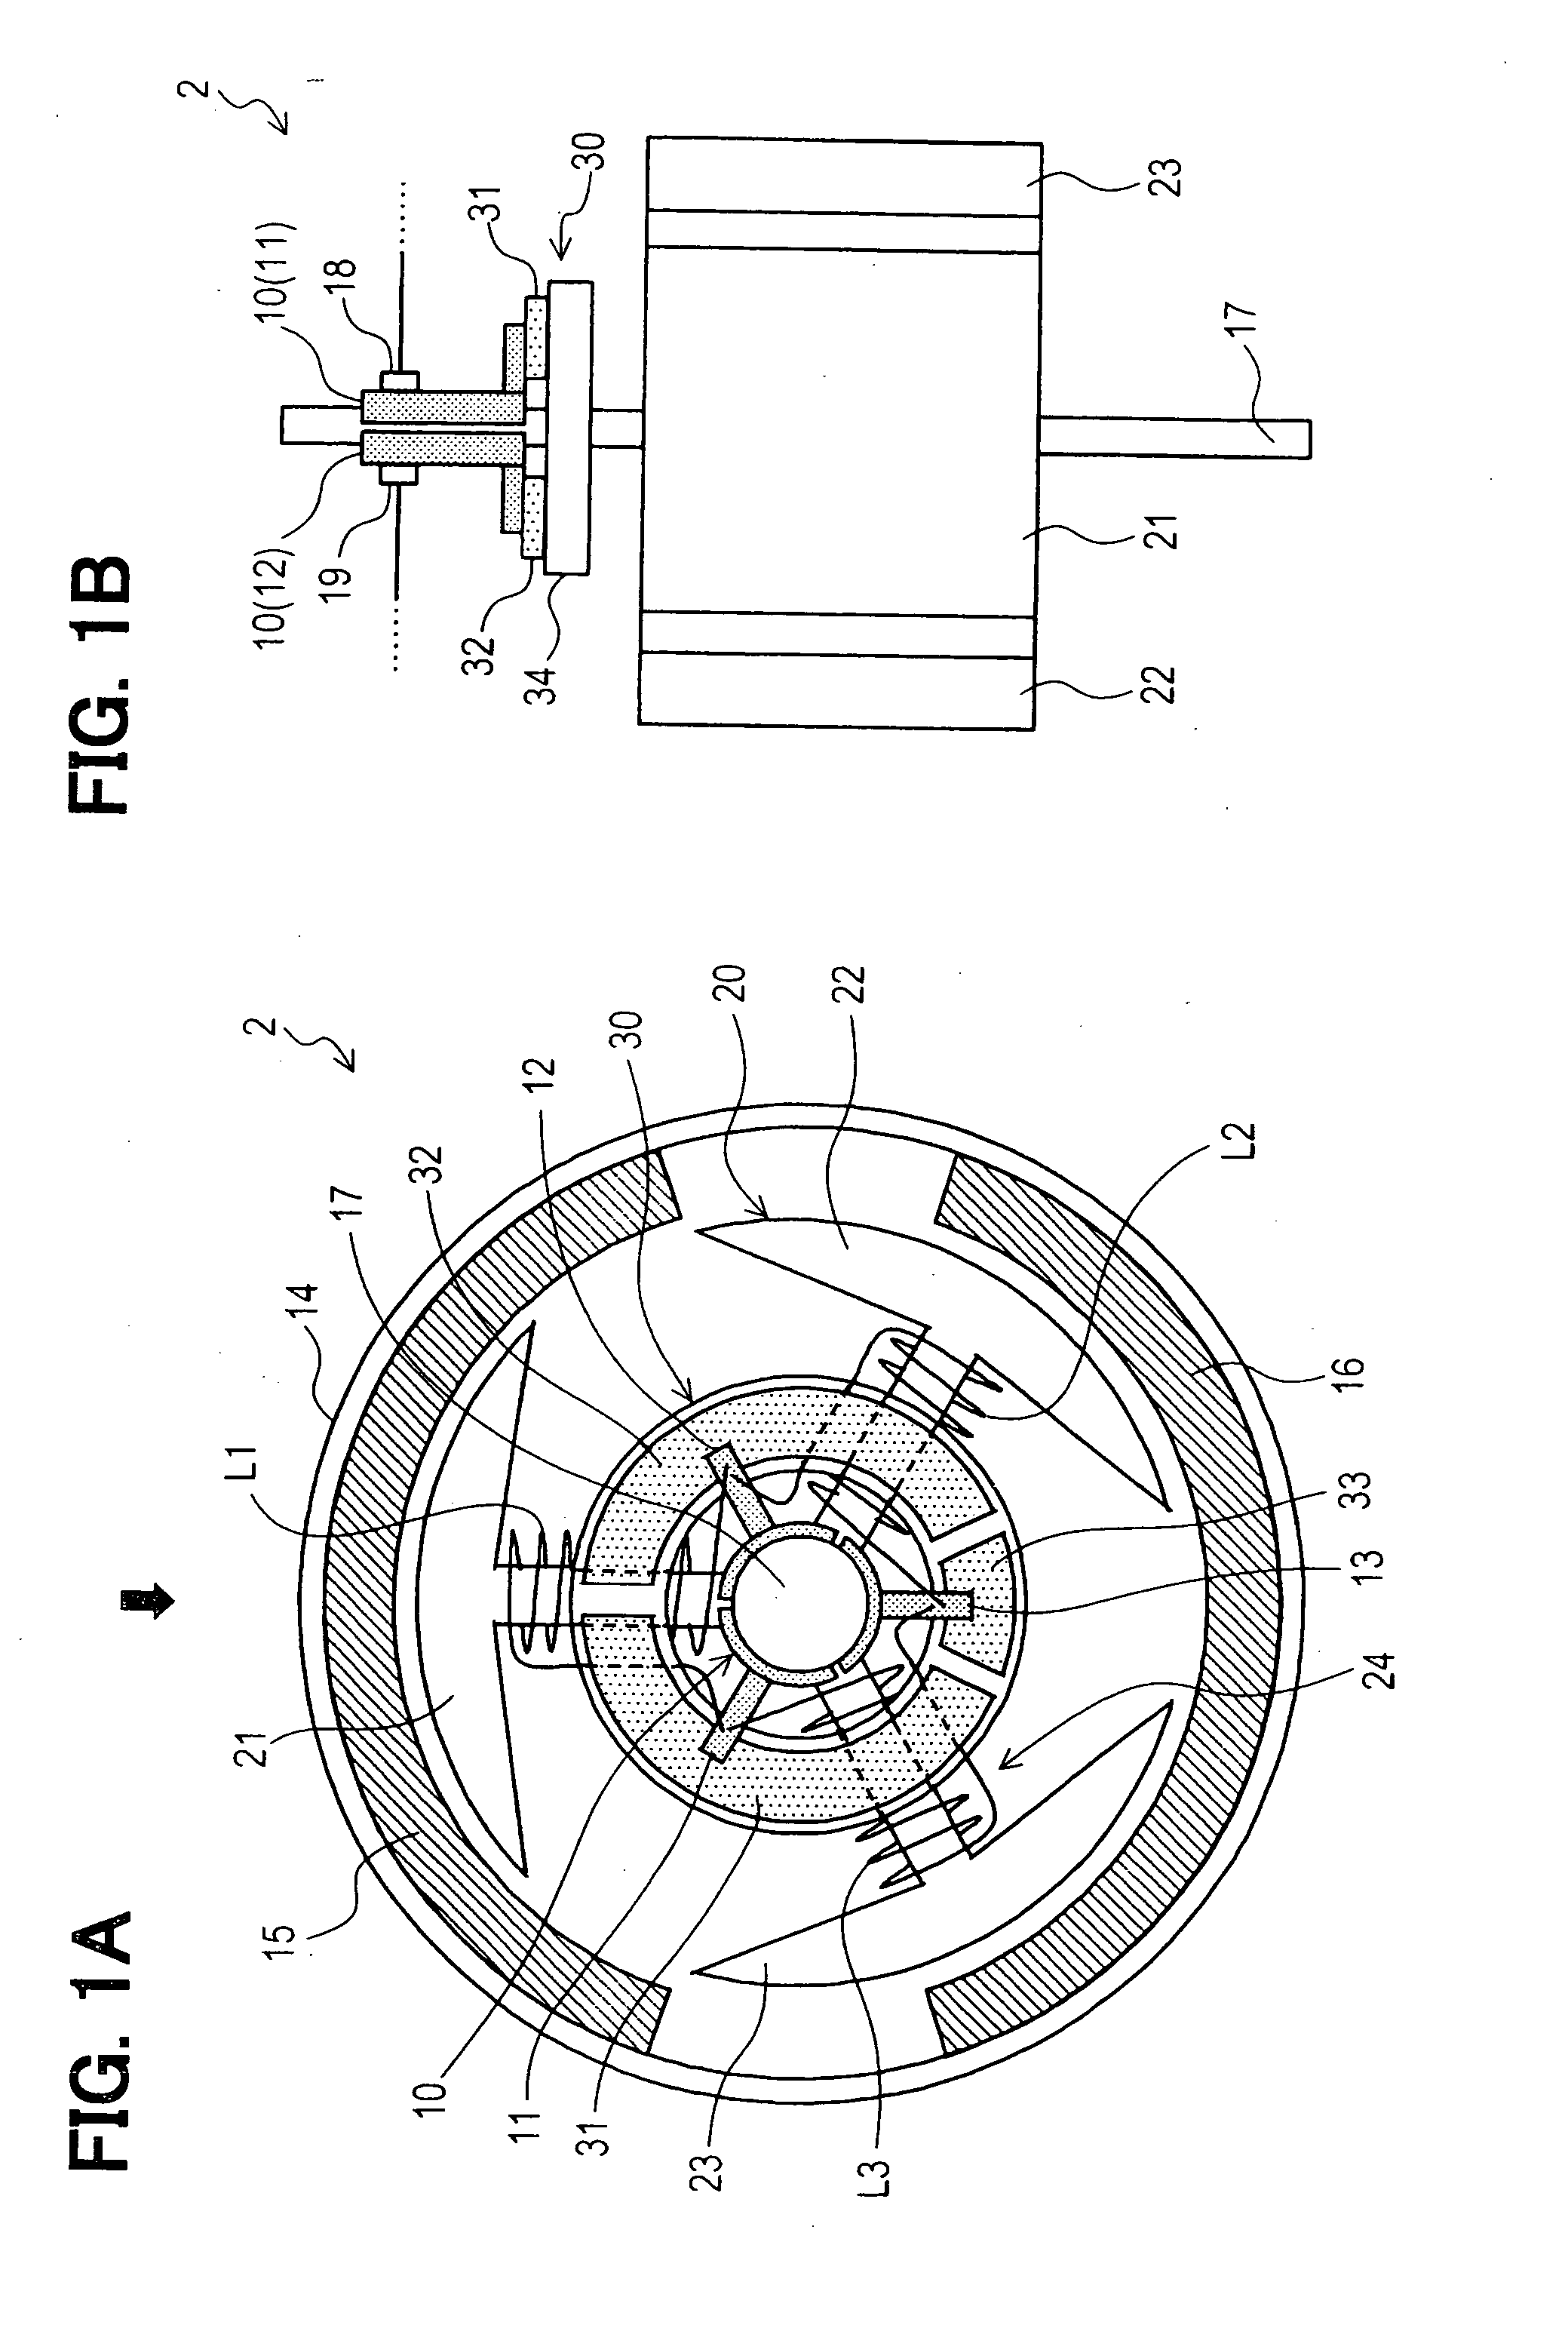 Rotation sensor and direct current motor